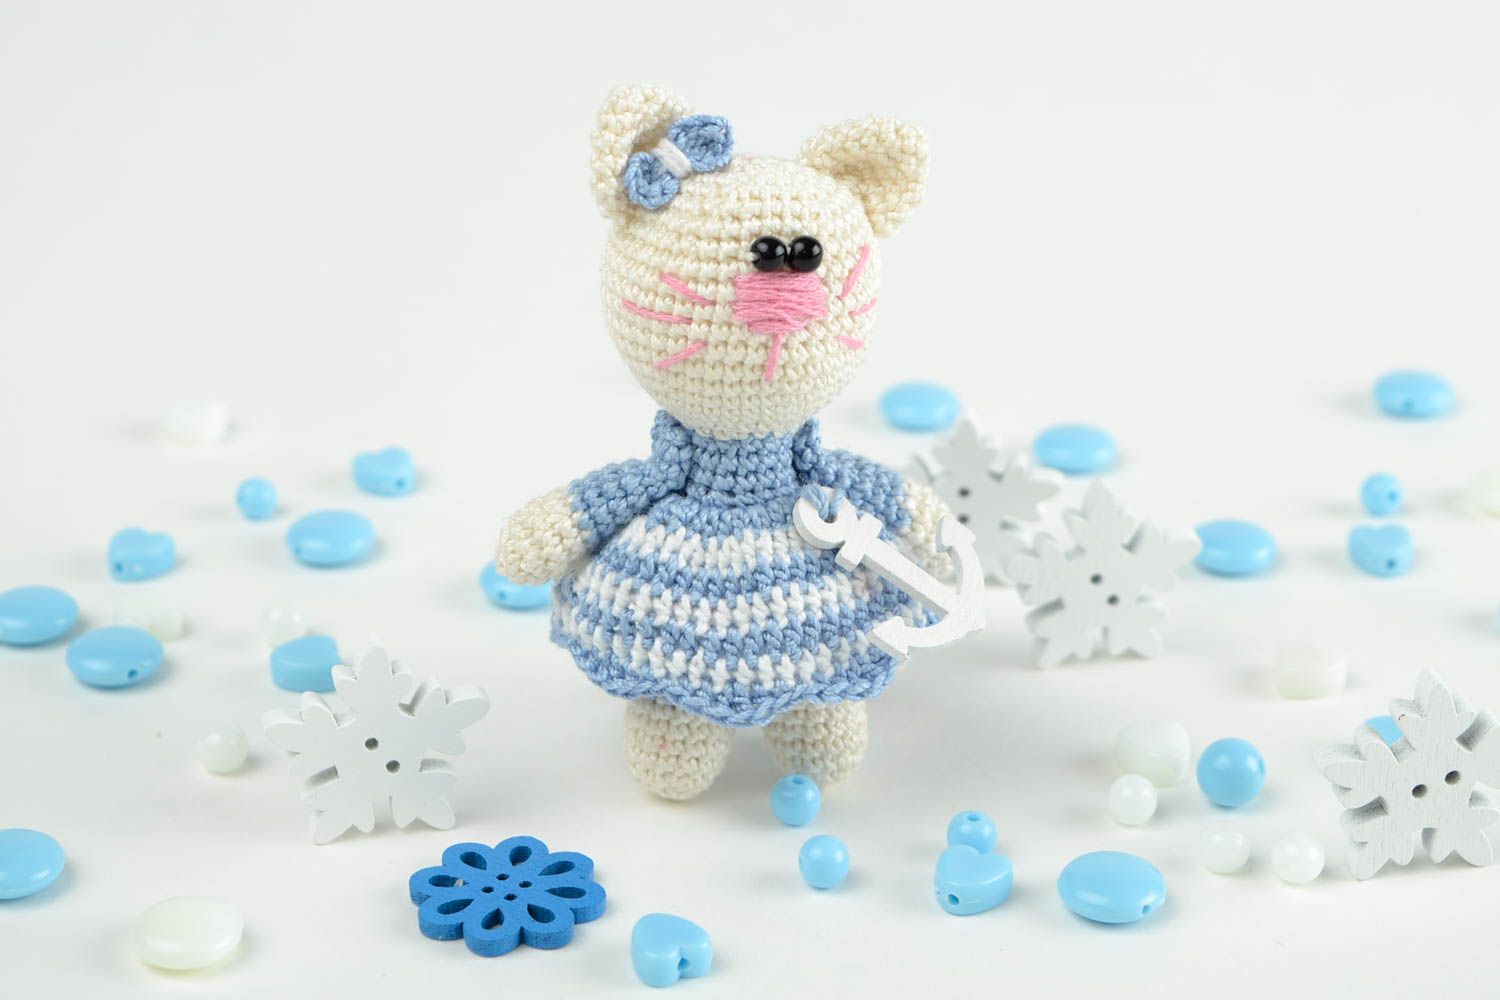 Handmade designer crocheted toy unusual cute soft toy stylish accessory photo 1